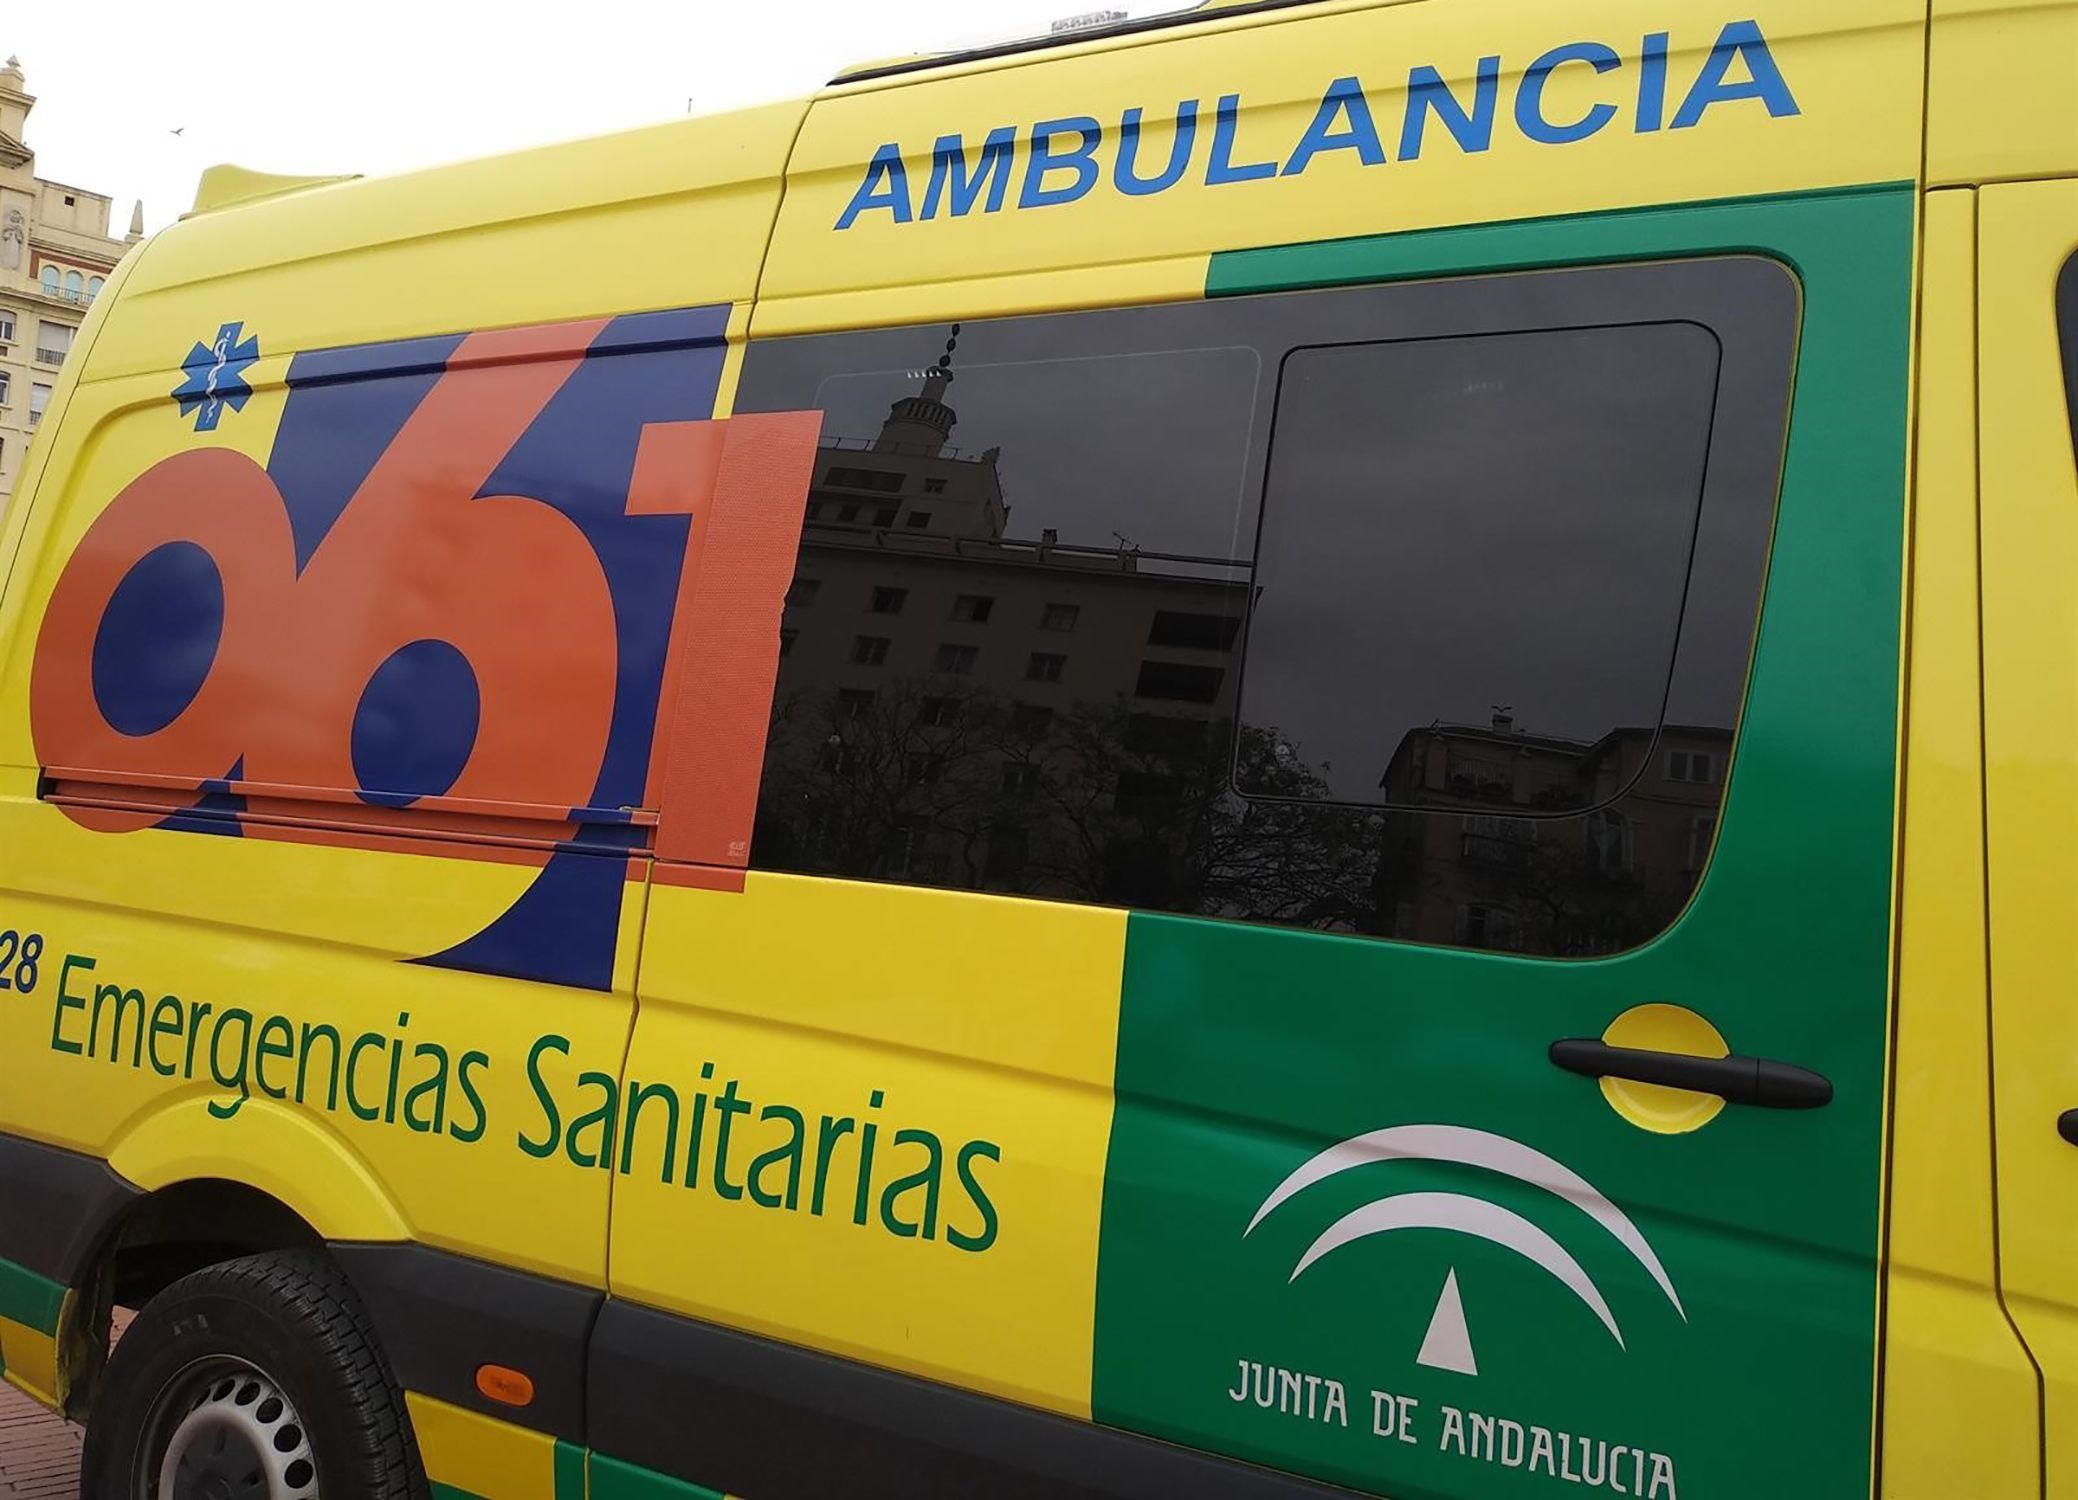 Ambulancia 061 Andalucia / EFE